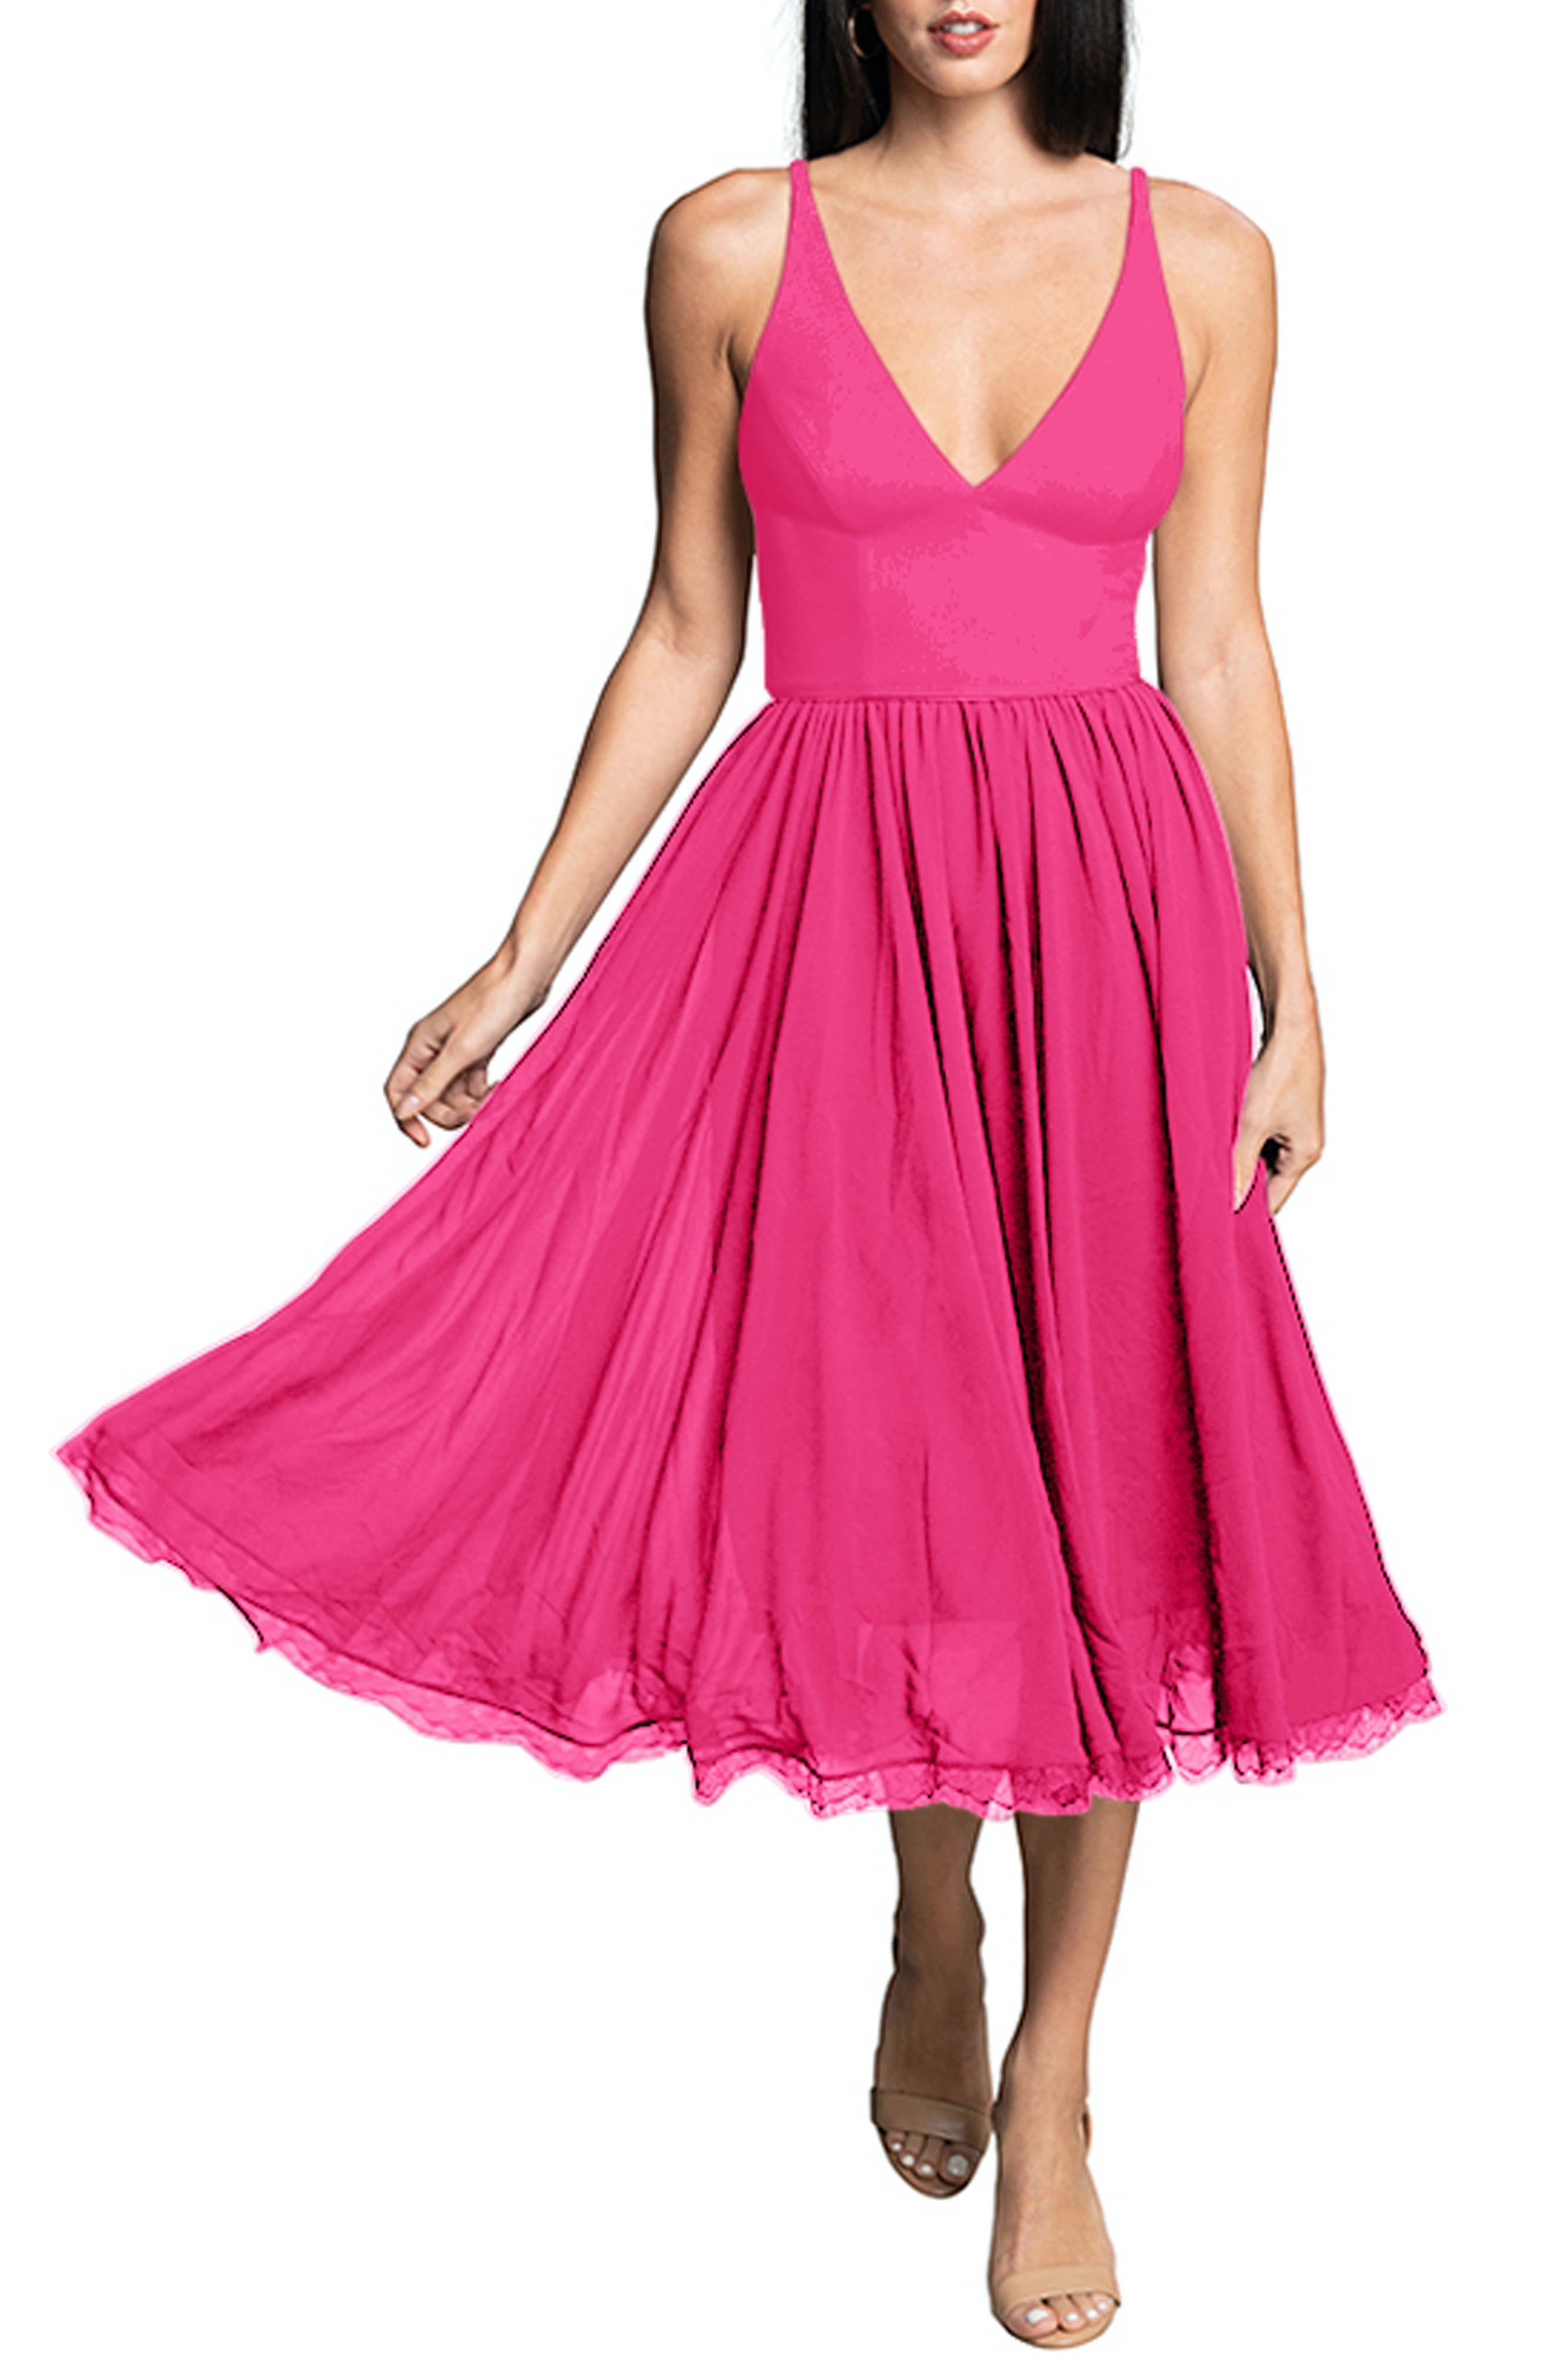 Buy > nordstrom hot pink dress > in stock